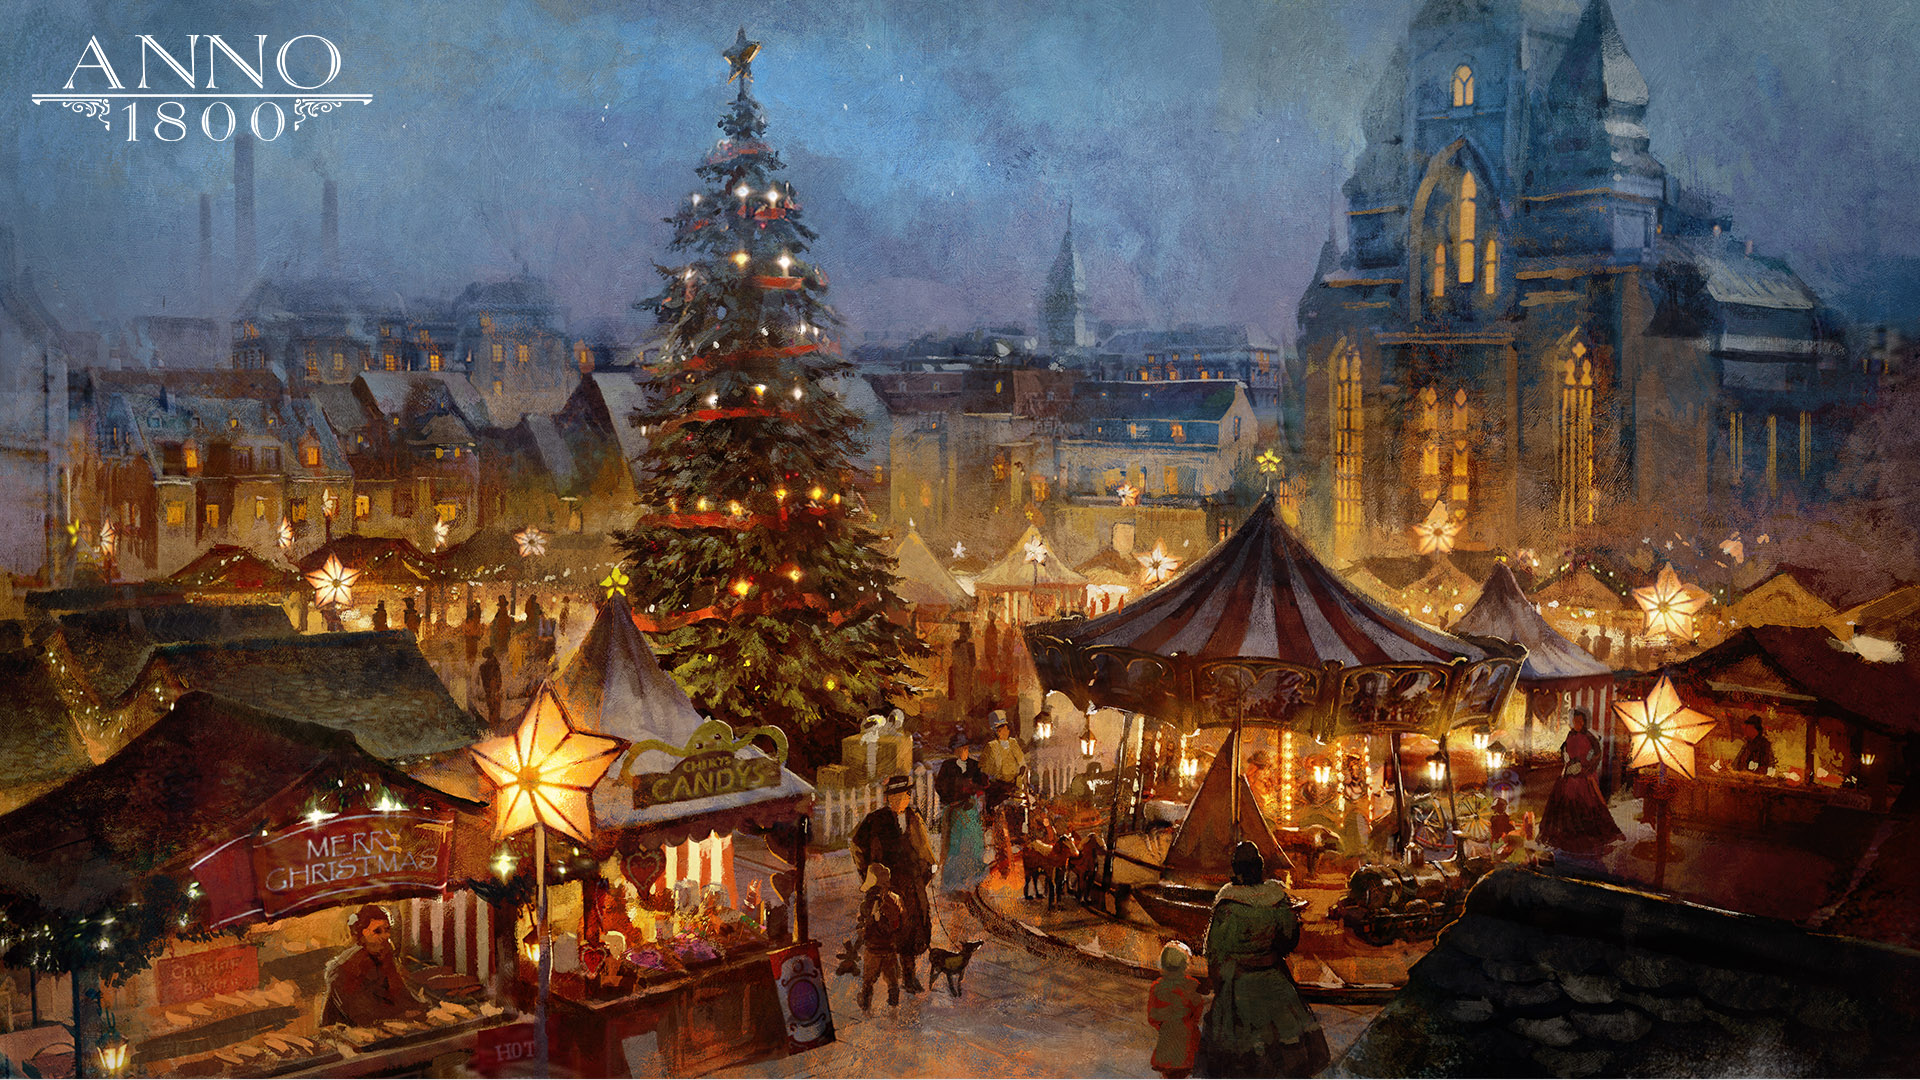 General 1920x1080 Anno 1800 1800s digital art concept art artwork Ubisoft Christmas Christmas market Christmas tree carousels Christmas lights markets